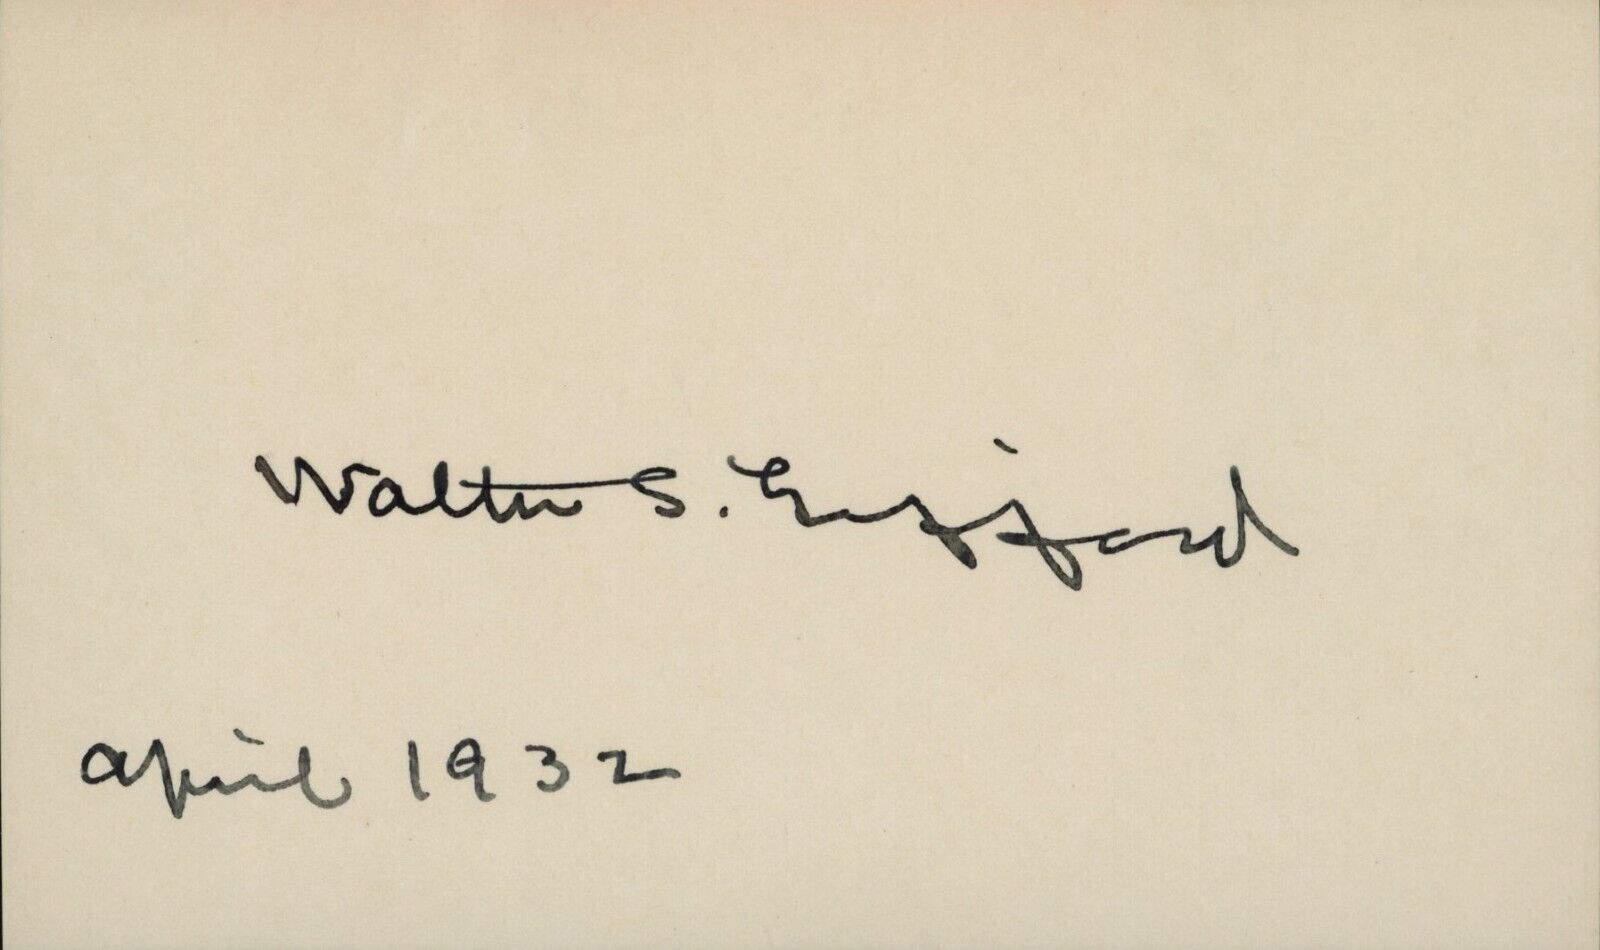 US Ambassador to the United Kingdom Walter S. Gifford Autograph - 1932